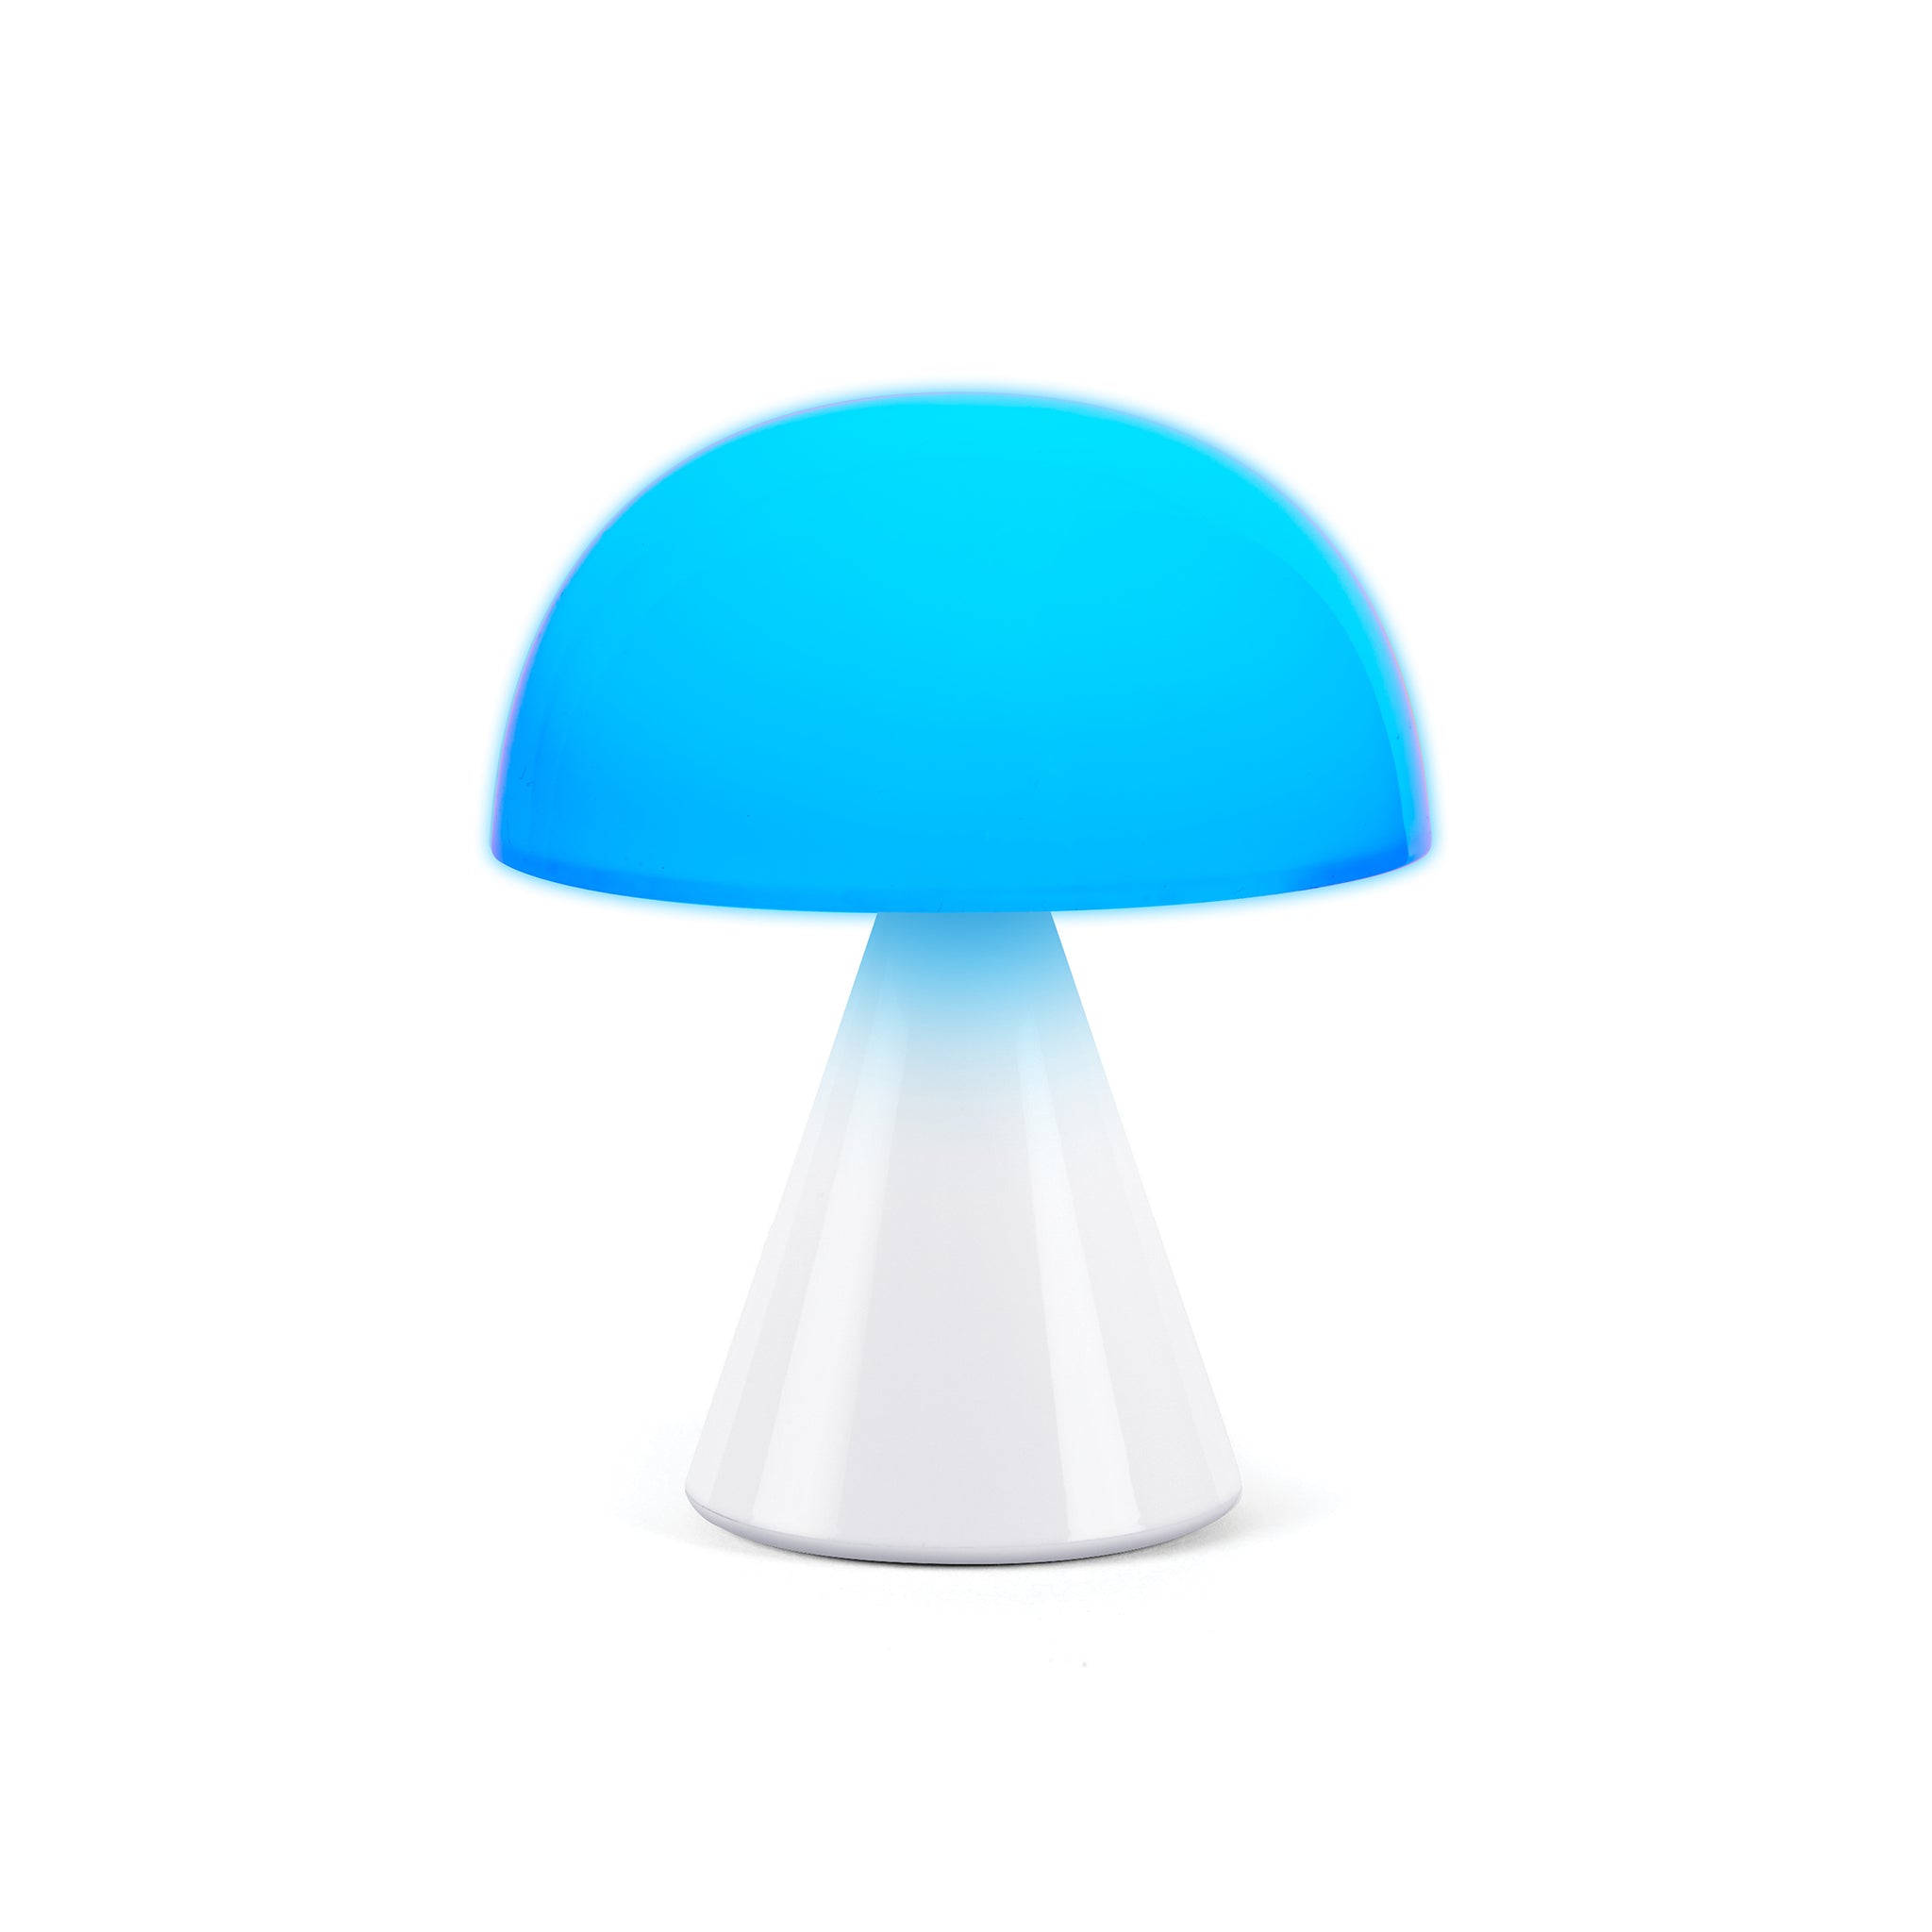 Lexon Mina Medium Glossy White│Oplaadbare LED-Lamp│art. LH64WG│vooraanzicht met blauw licht aan